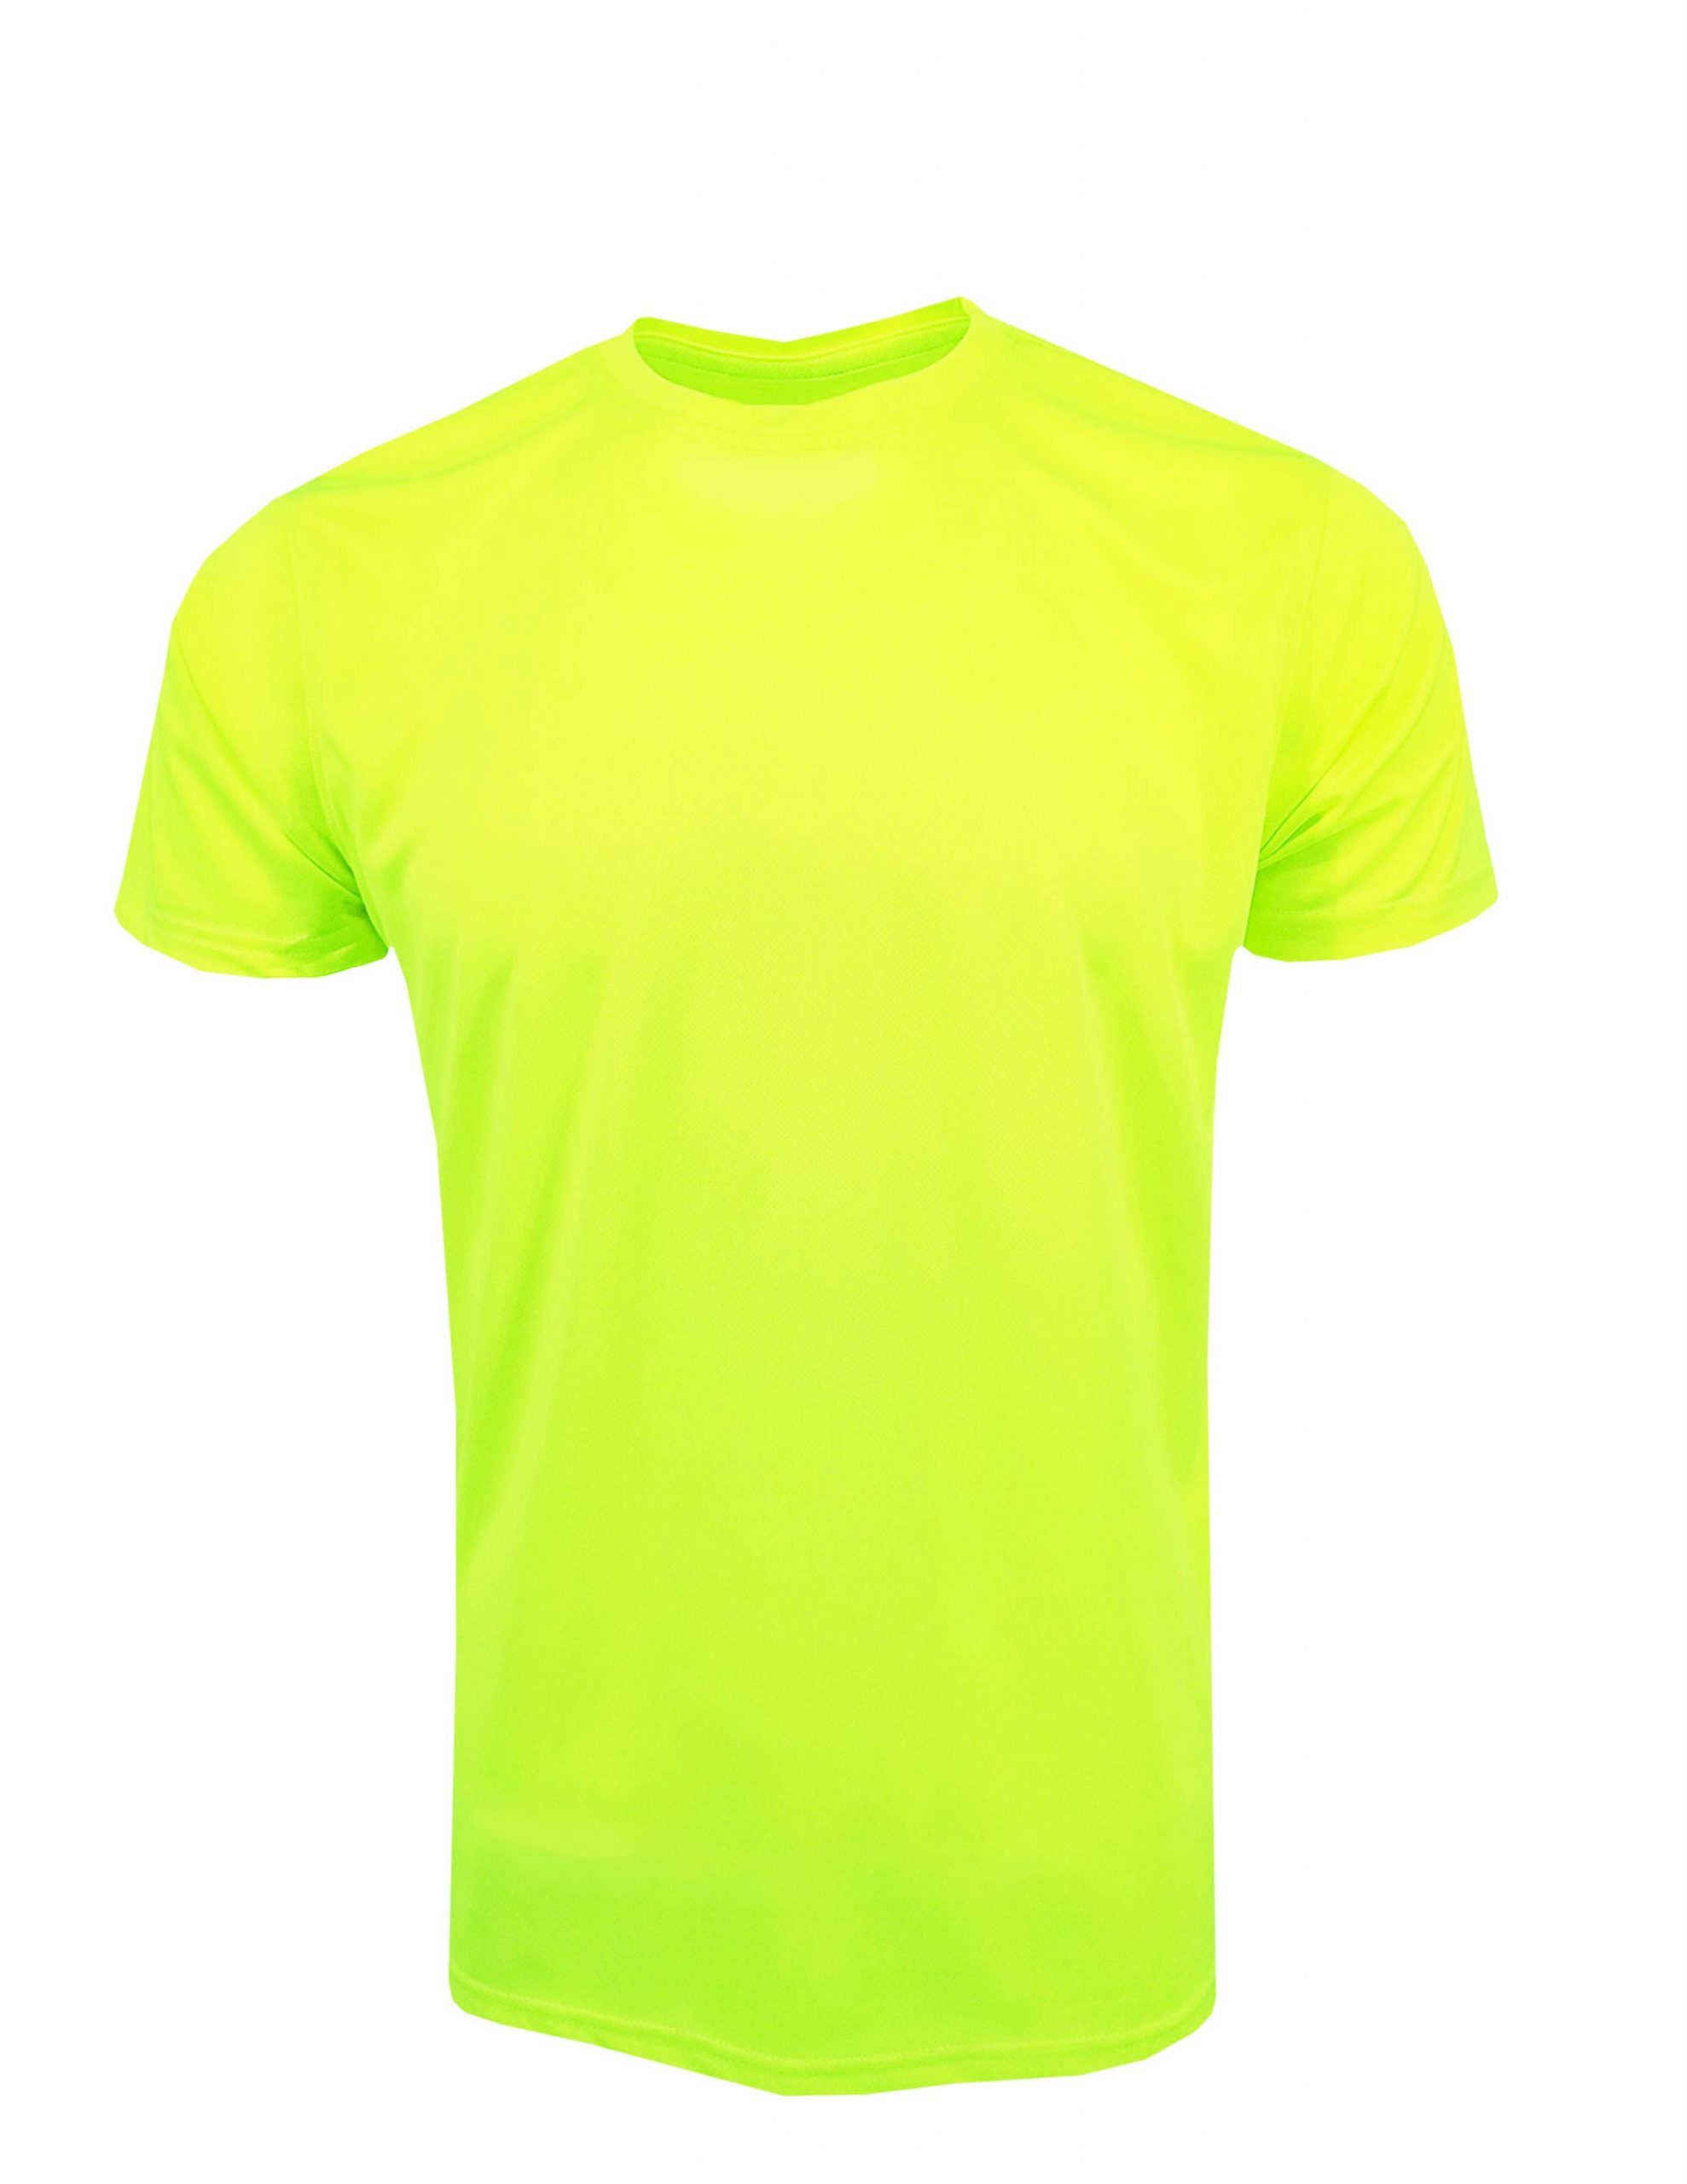 QDR 5126 Neon Yellow - Rightway Basic T-Shirt | Basic T-Shirt Supplier ...